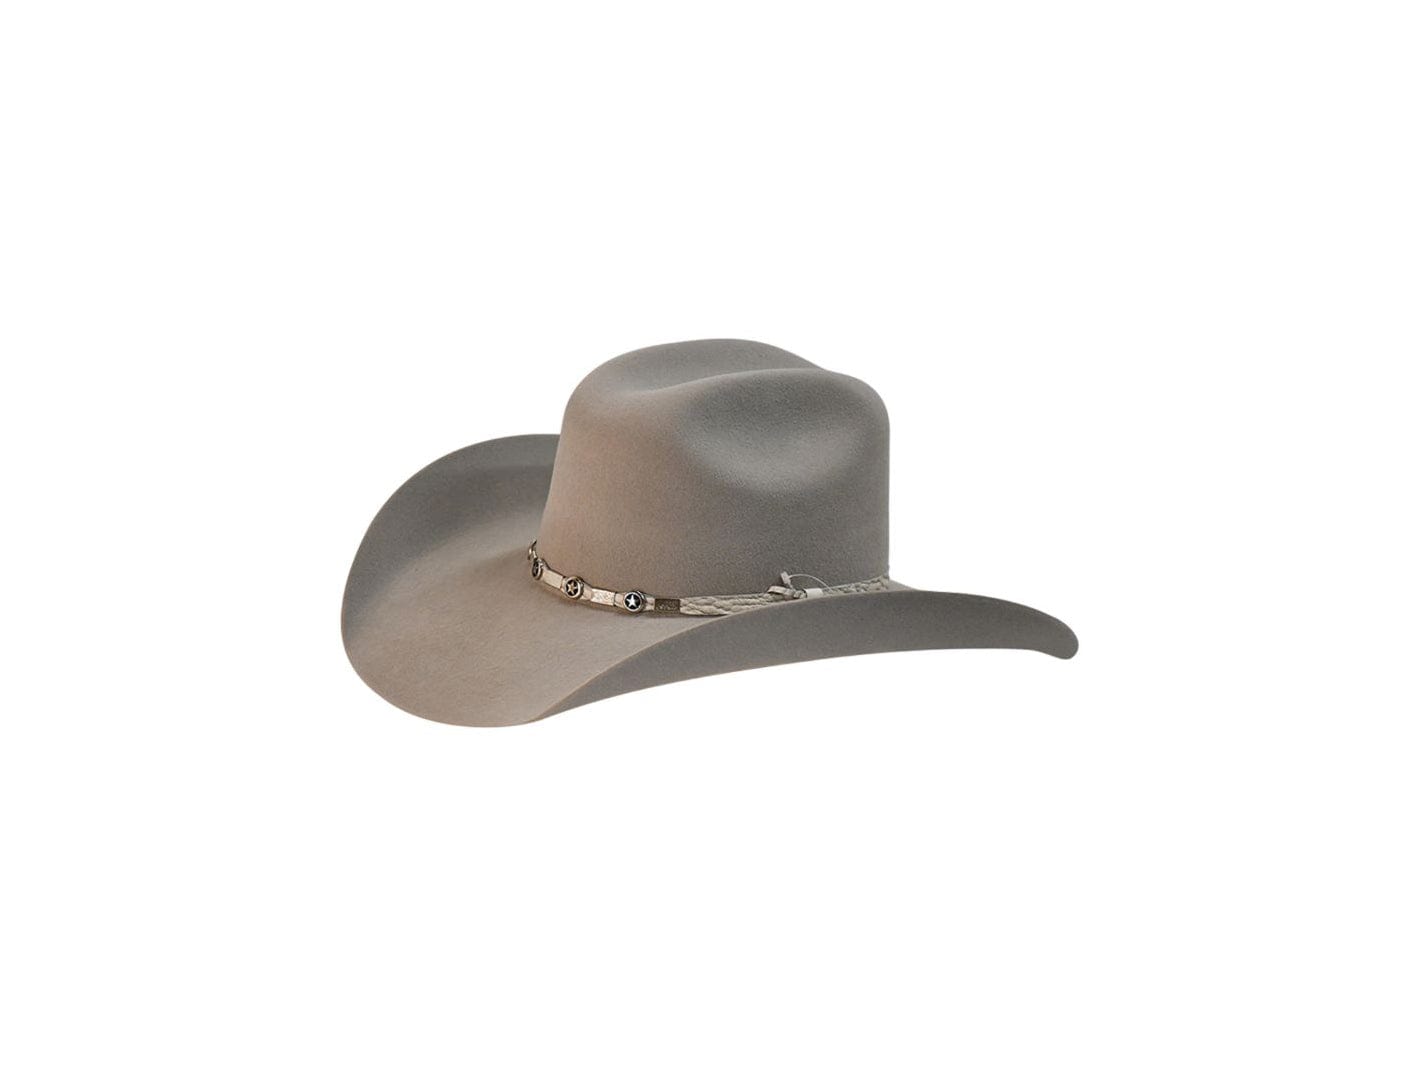 Exclusive "Austin" Texas Country Western Felt Cowboy Hat Platinum